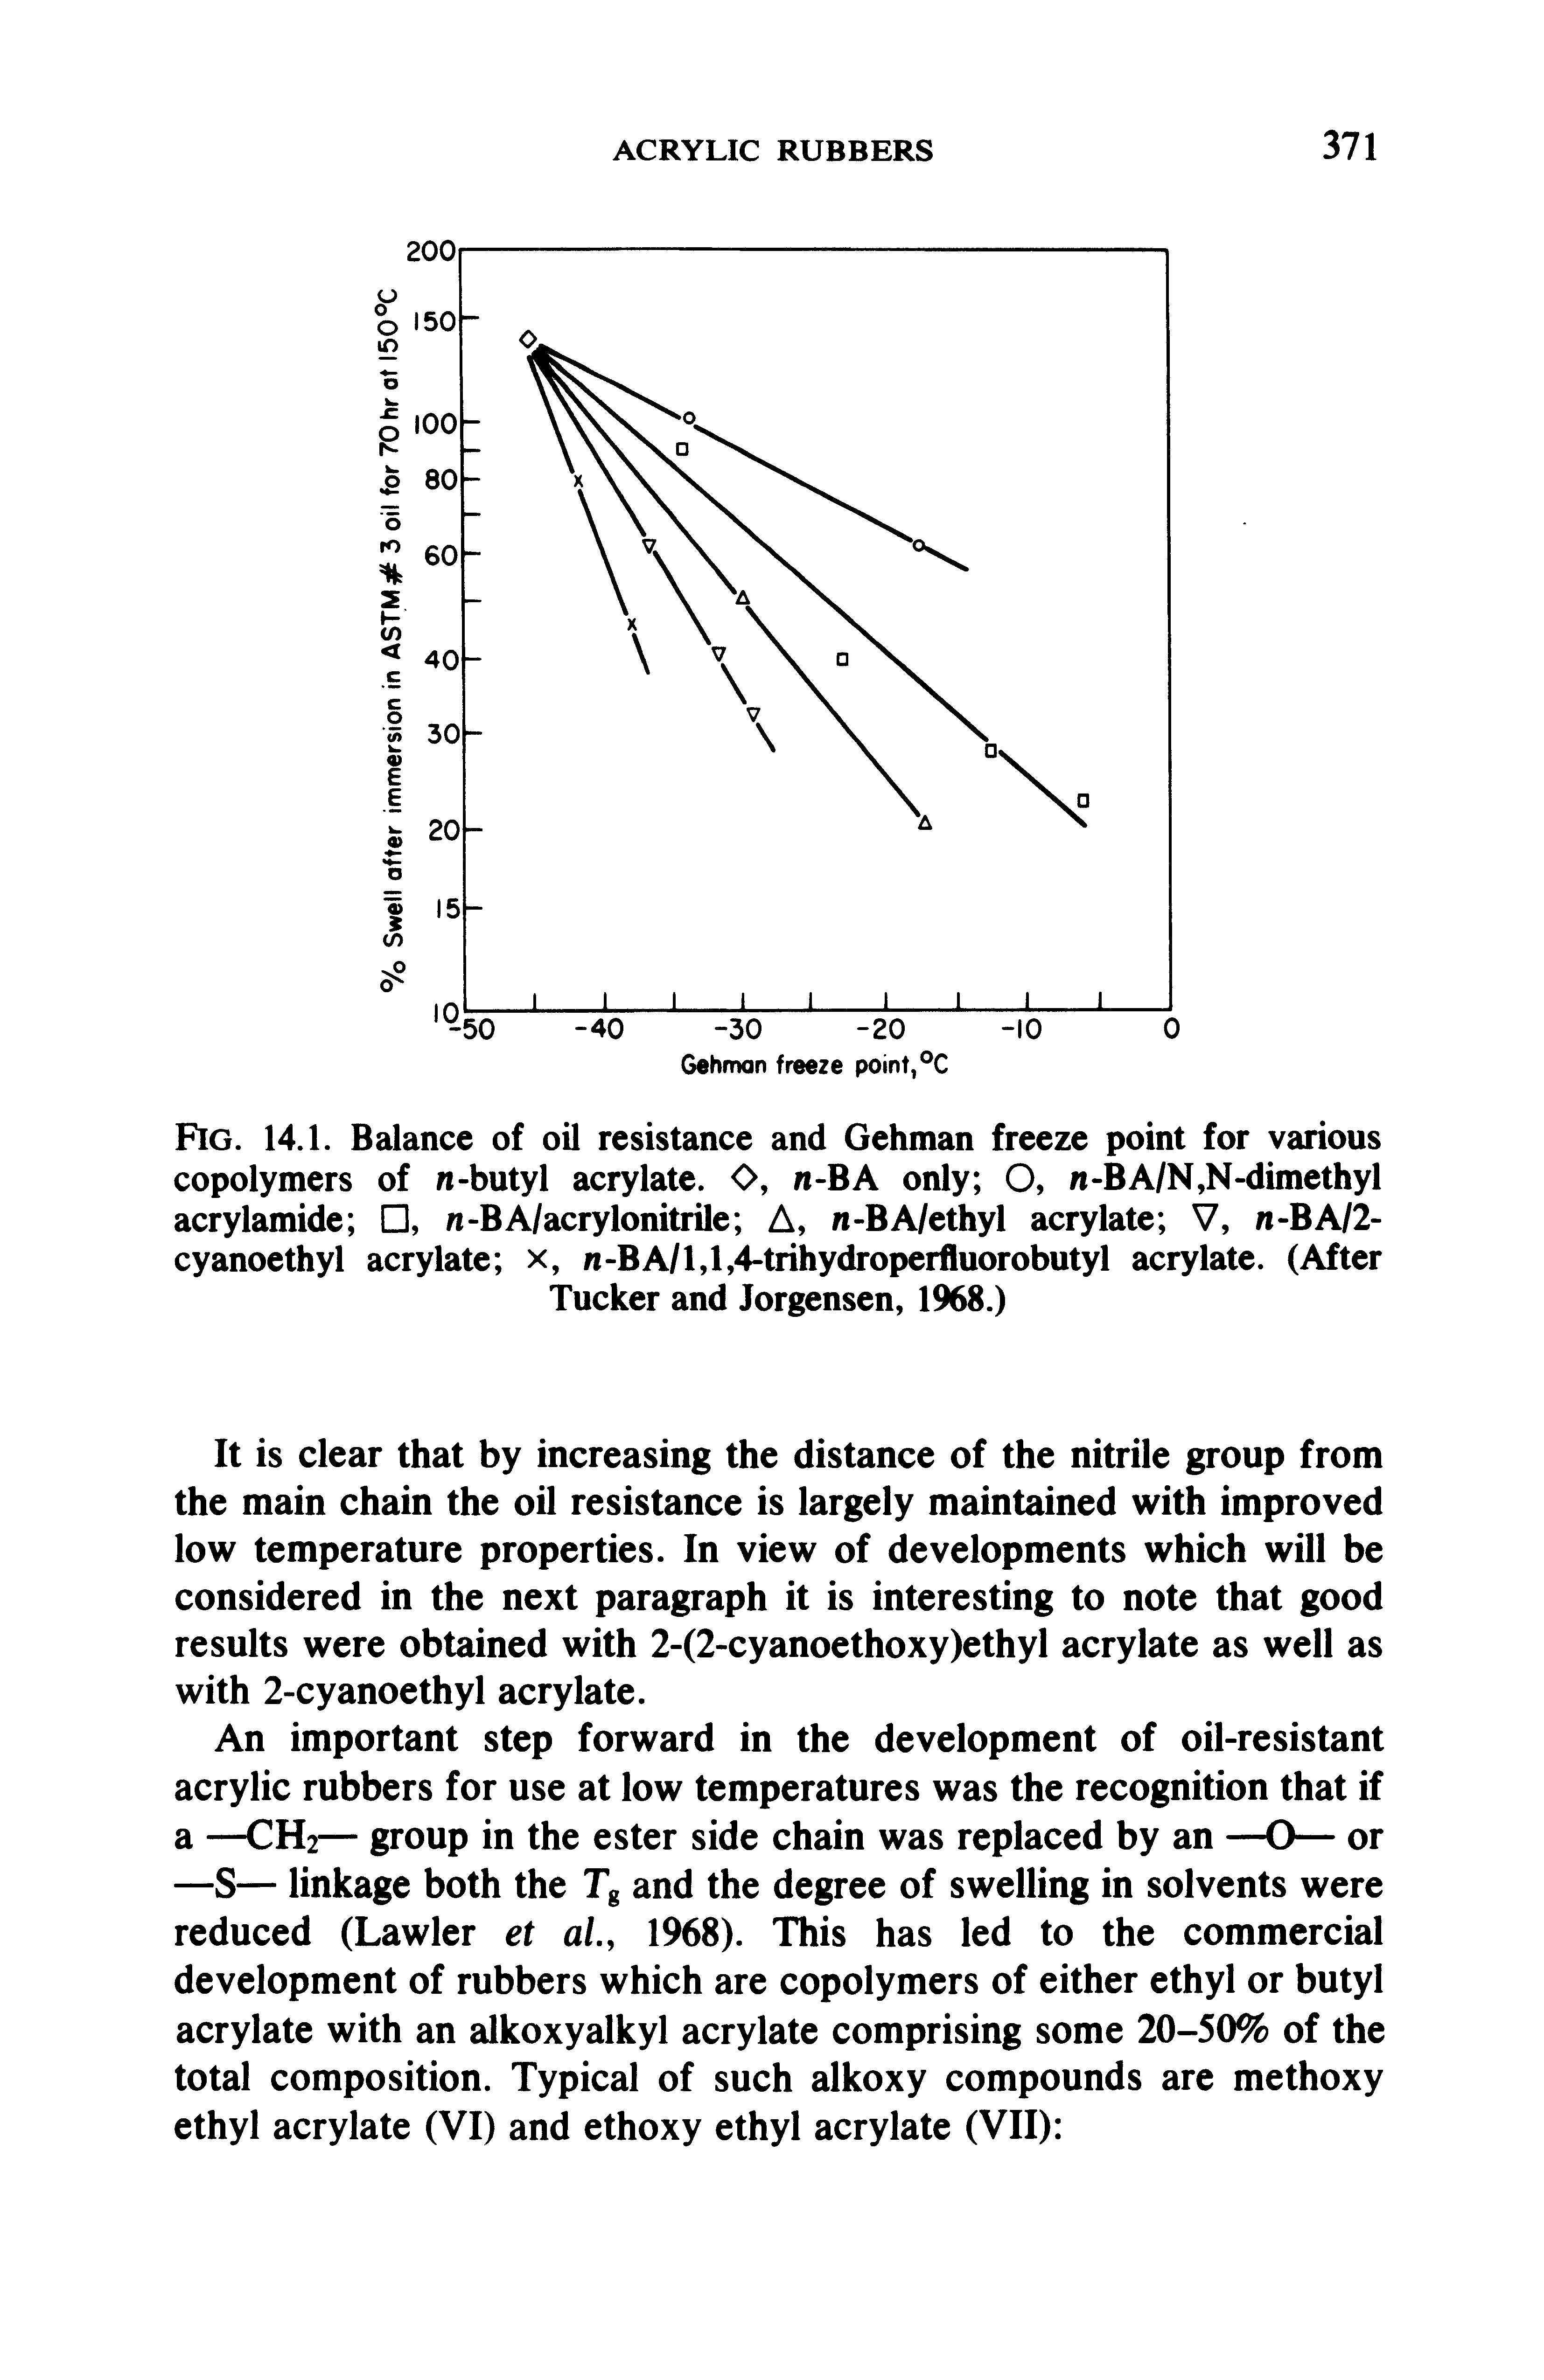 Fig. 14.1. Balance of oil resistance and Gehman freeze point for various copolymers of n-butyl acrylate. O, n-BA only O, n-BA/N,N-dimethyl acrylamide , n-BA/acrylonitrile A, n-BA/ethyl acrylate V, -BA/2-cyanoethyl acrylate x, n-BA/l,l,4-trihydroperfluorobutyl acrylate. (After Tucker and Jorgensen, 1968.)...